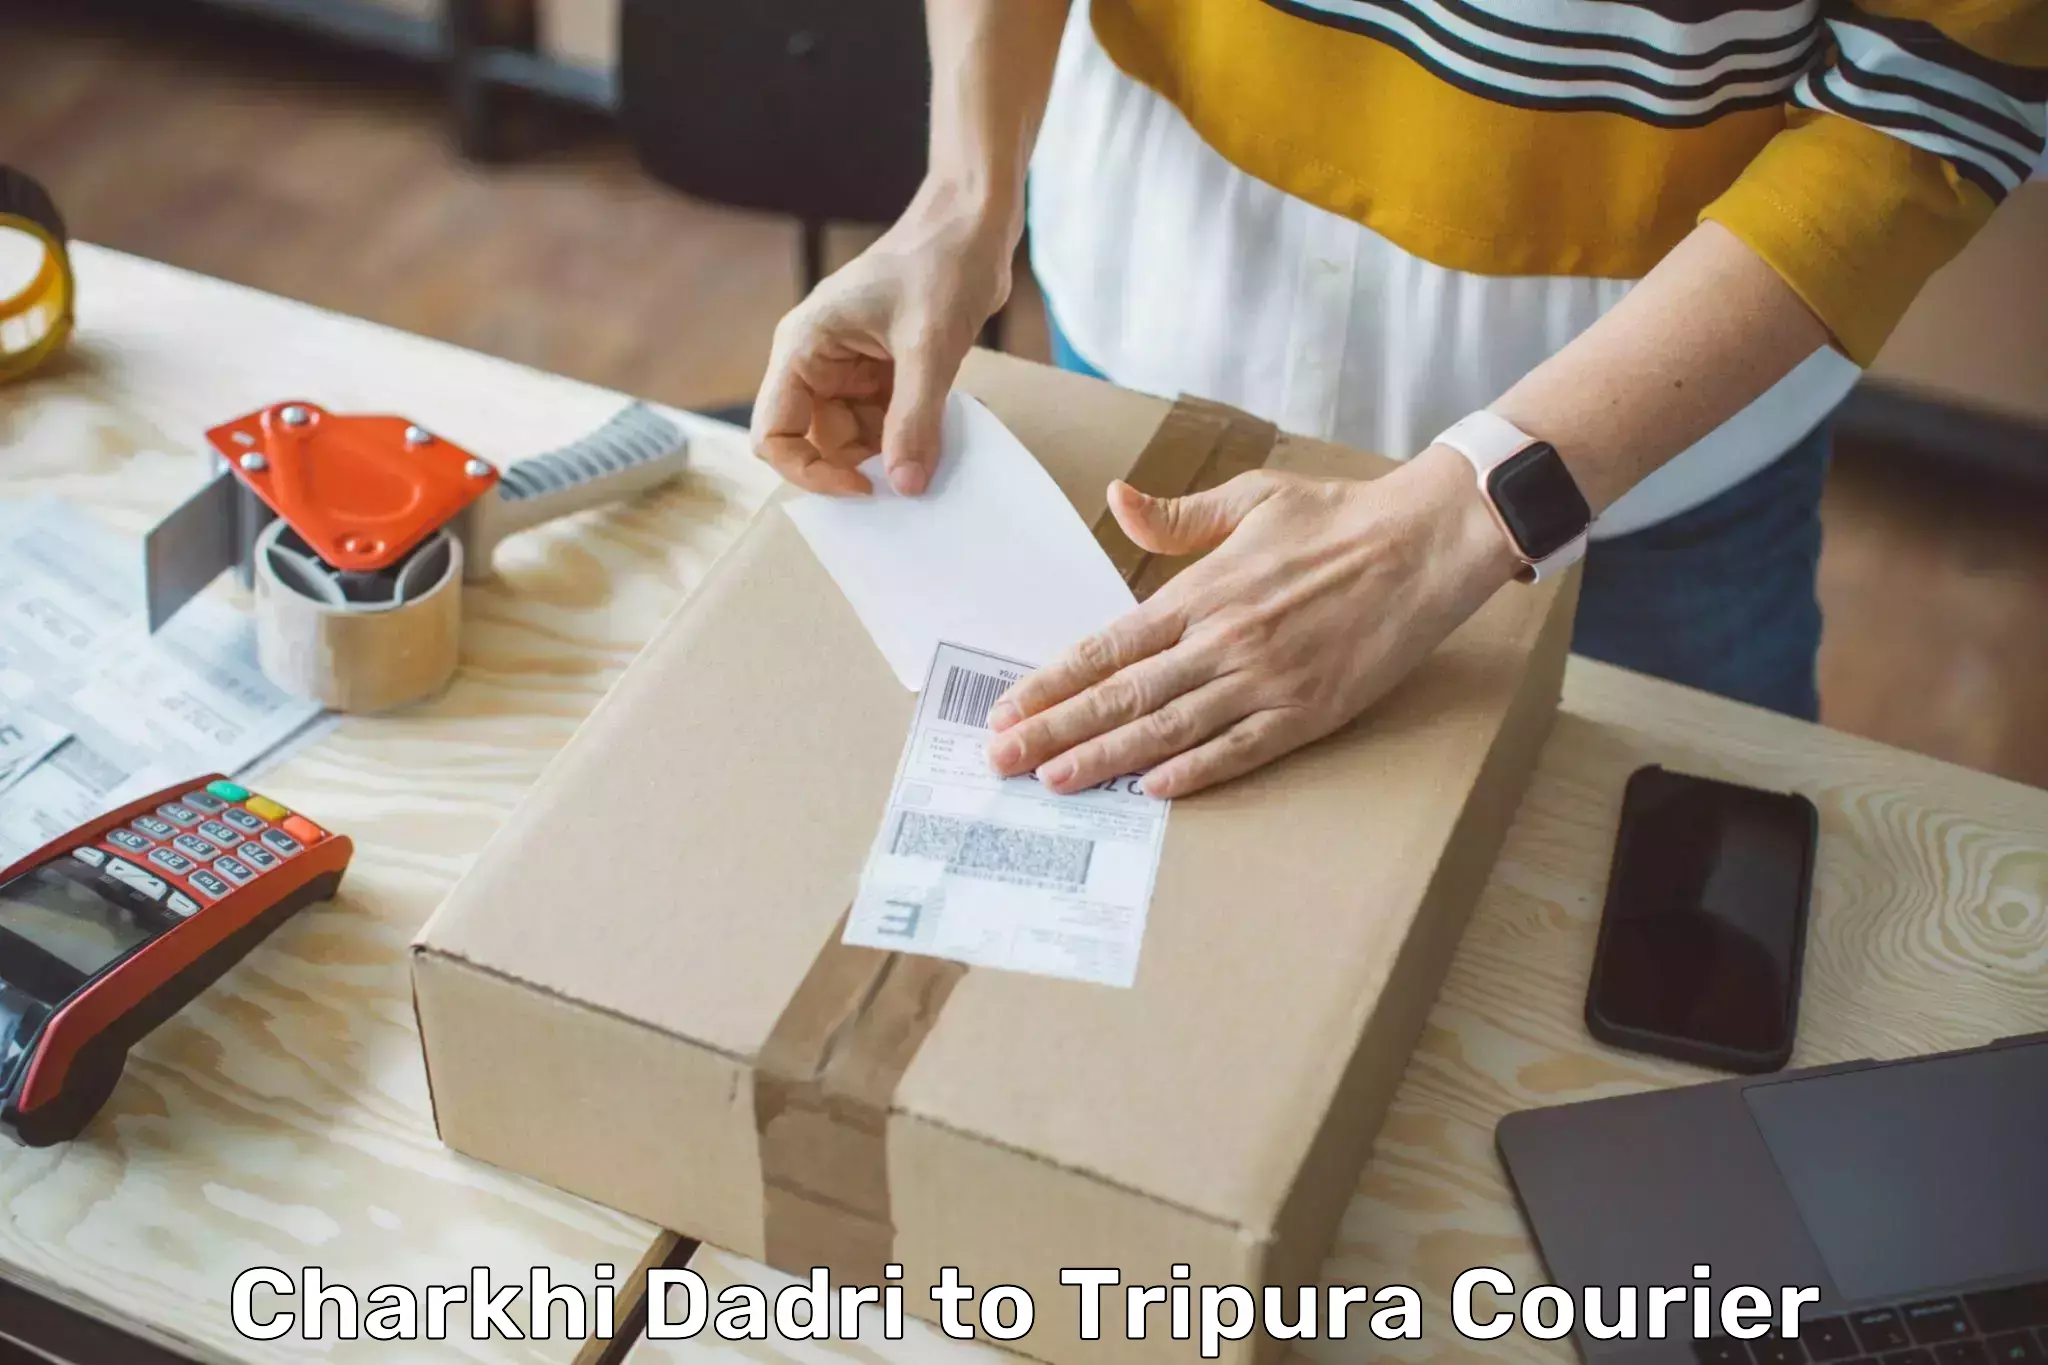 Courier service partnerships Charkhi Dadri to Tripura